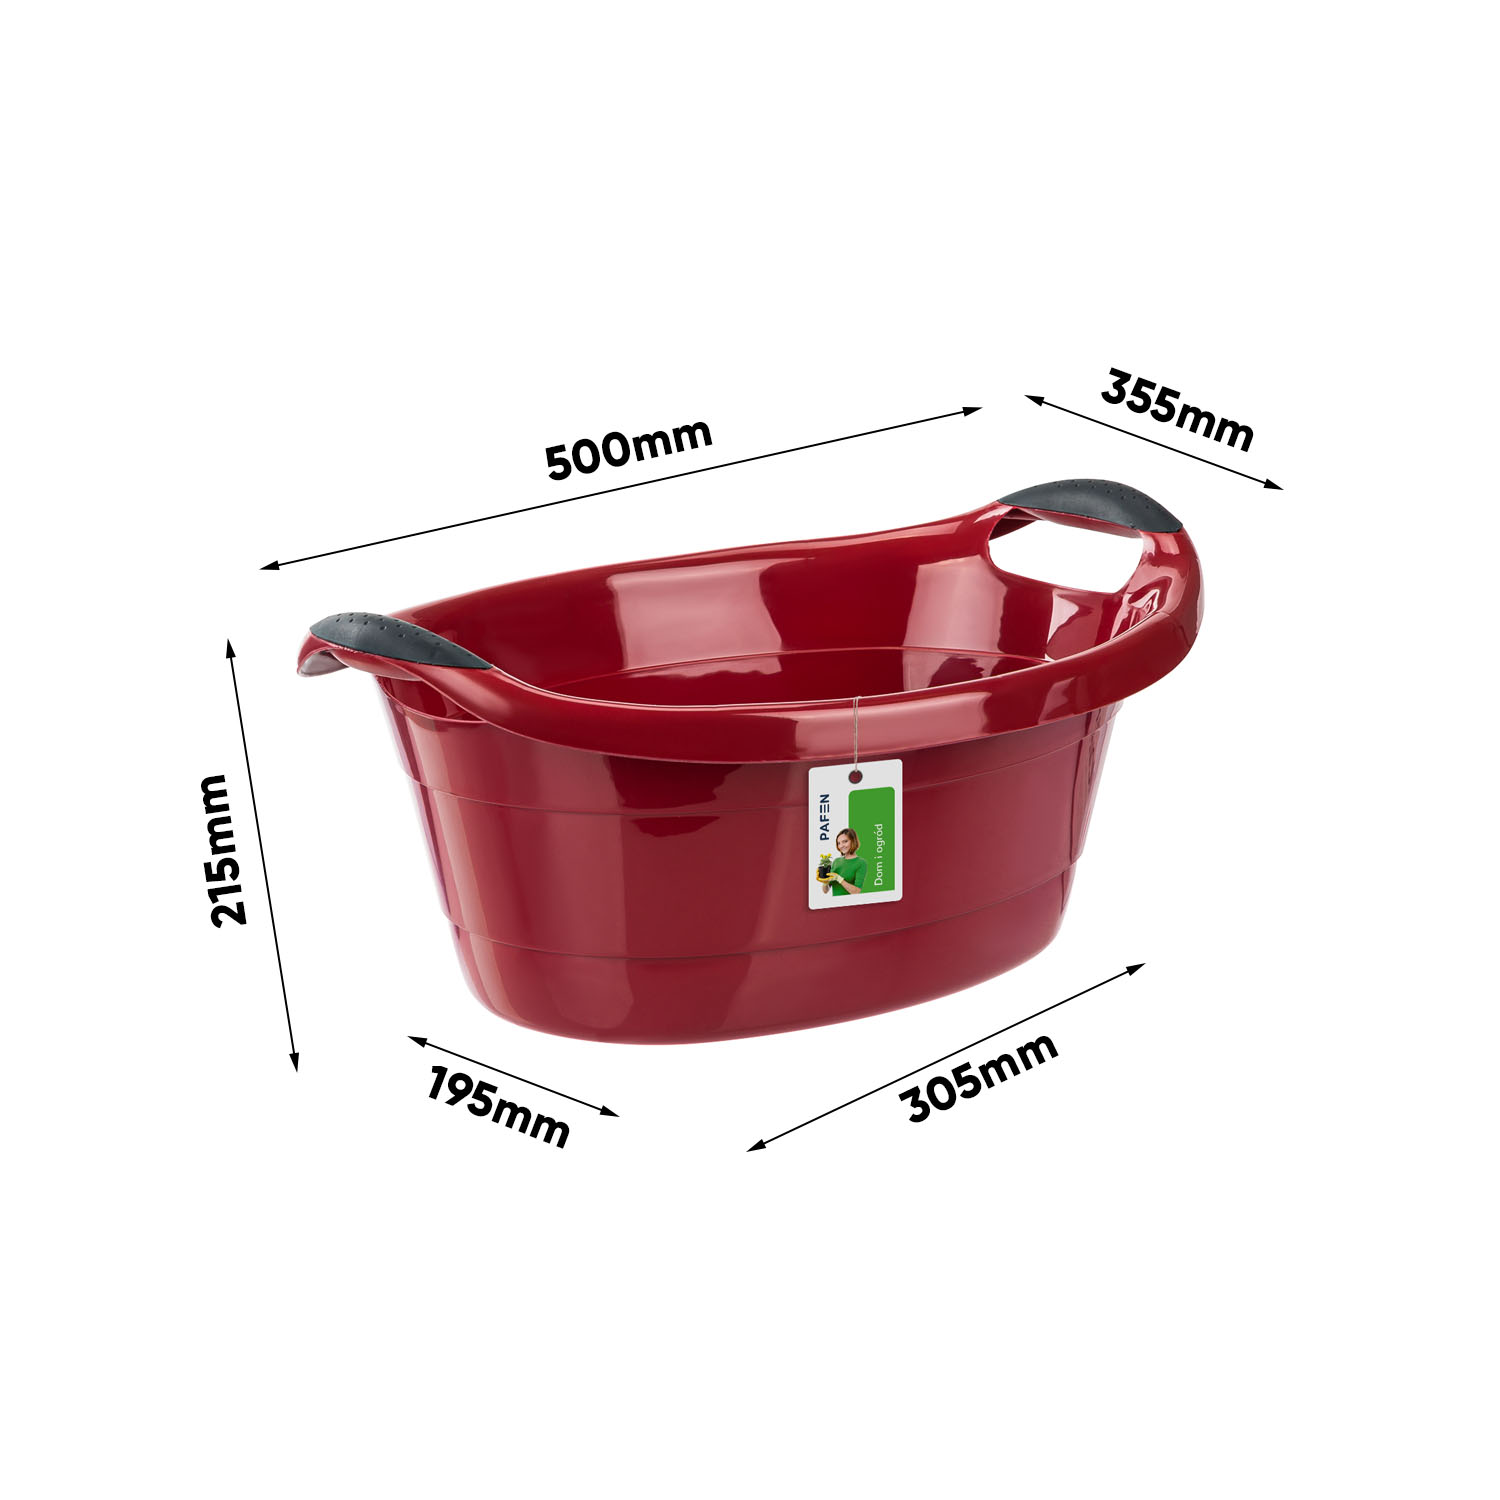 Wymiary Laundry bowl Red (1)